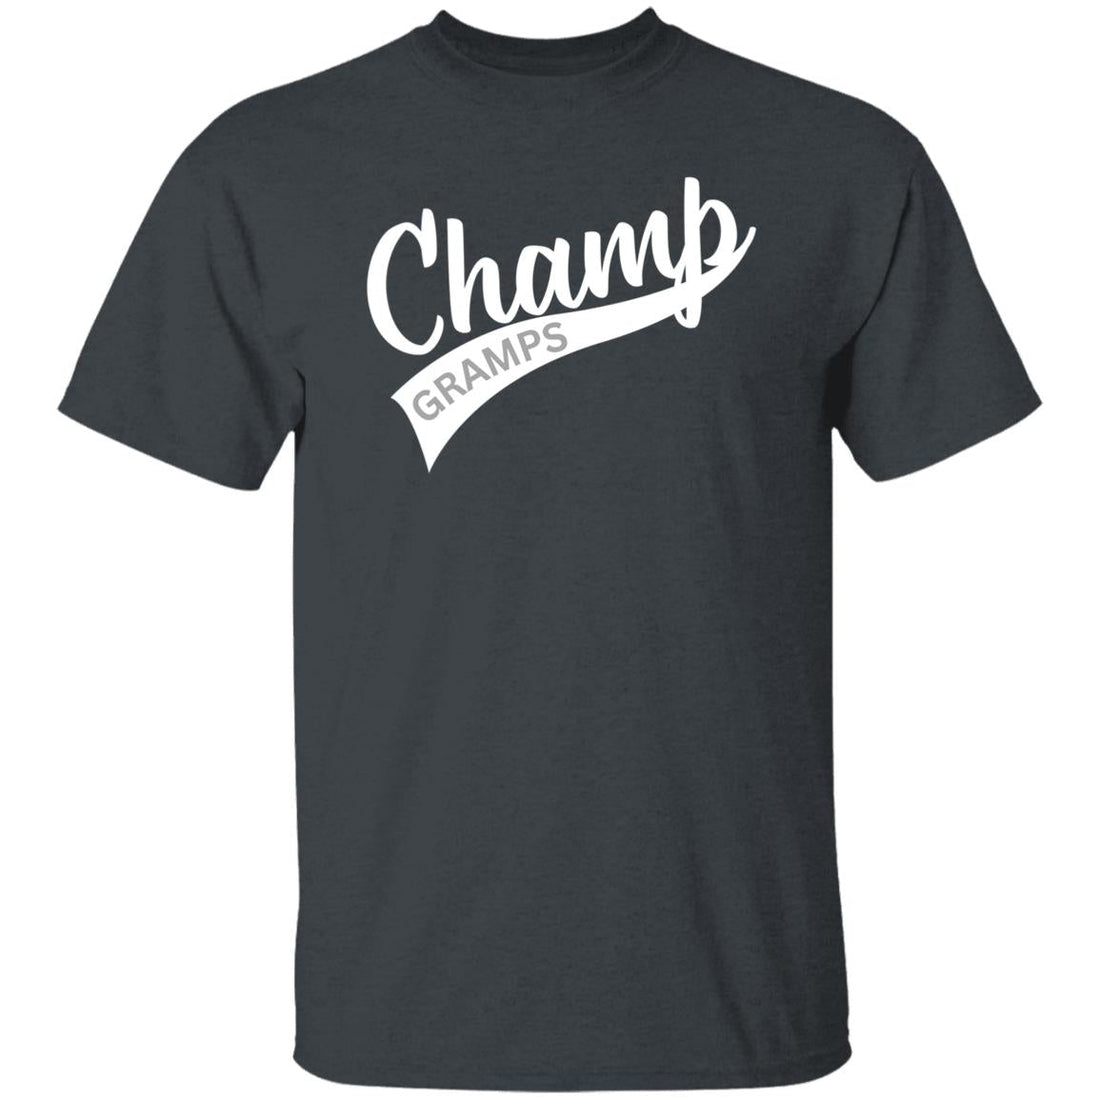 Champ Gramps T-Shirt - T-Shirts - Positively Sassy - Champ Gramps T-Shirt